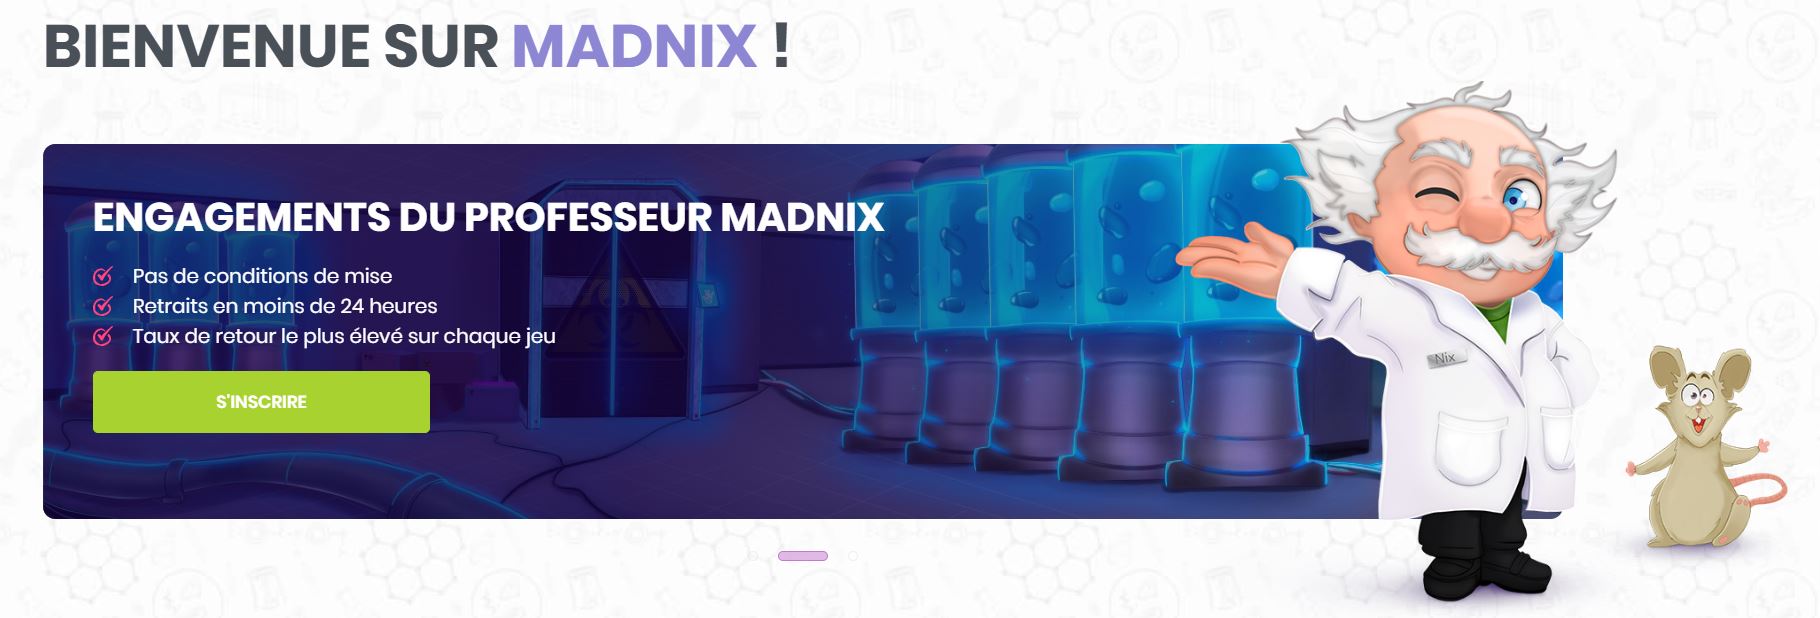 Madnix casino - Meilleurs plinko casinos